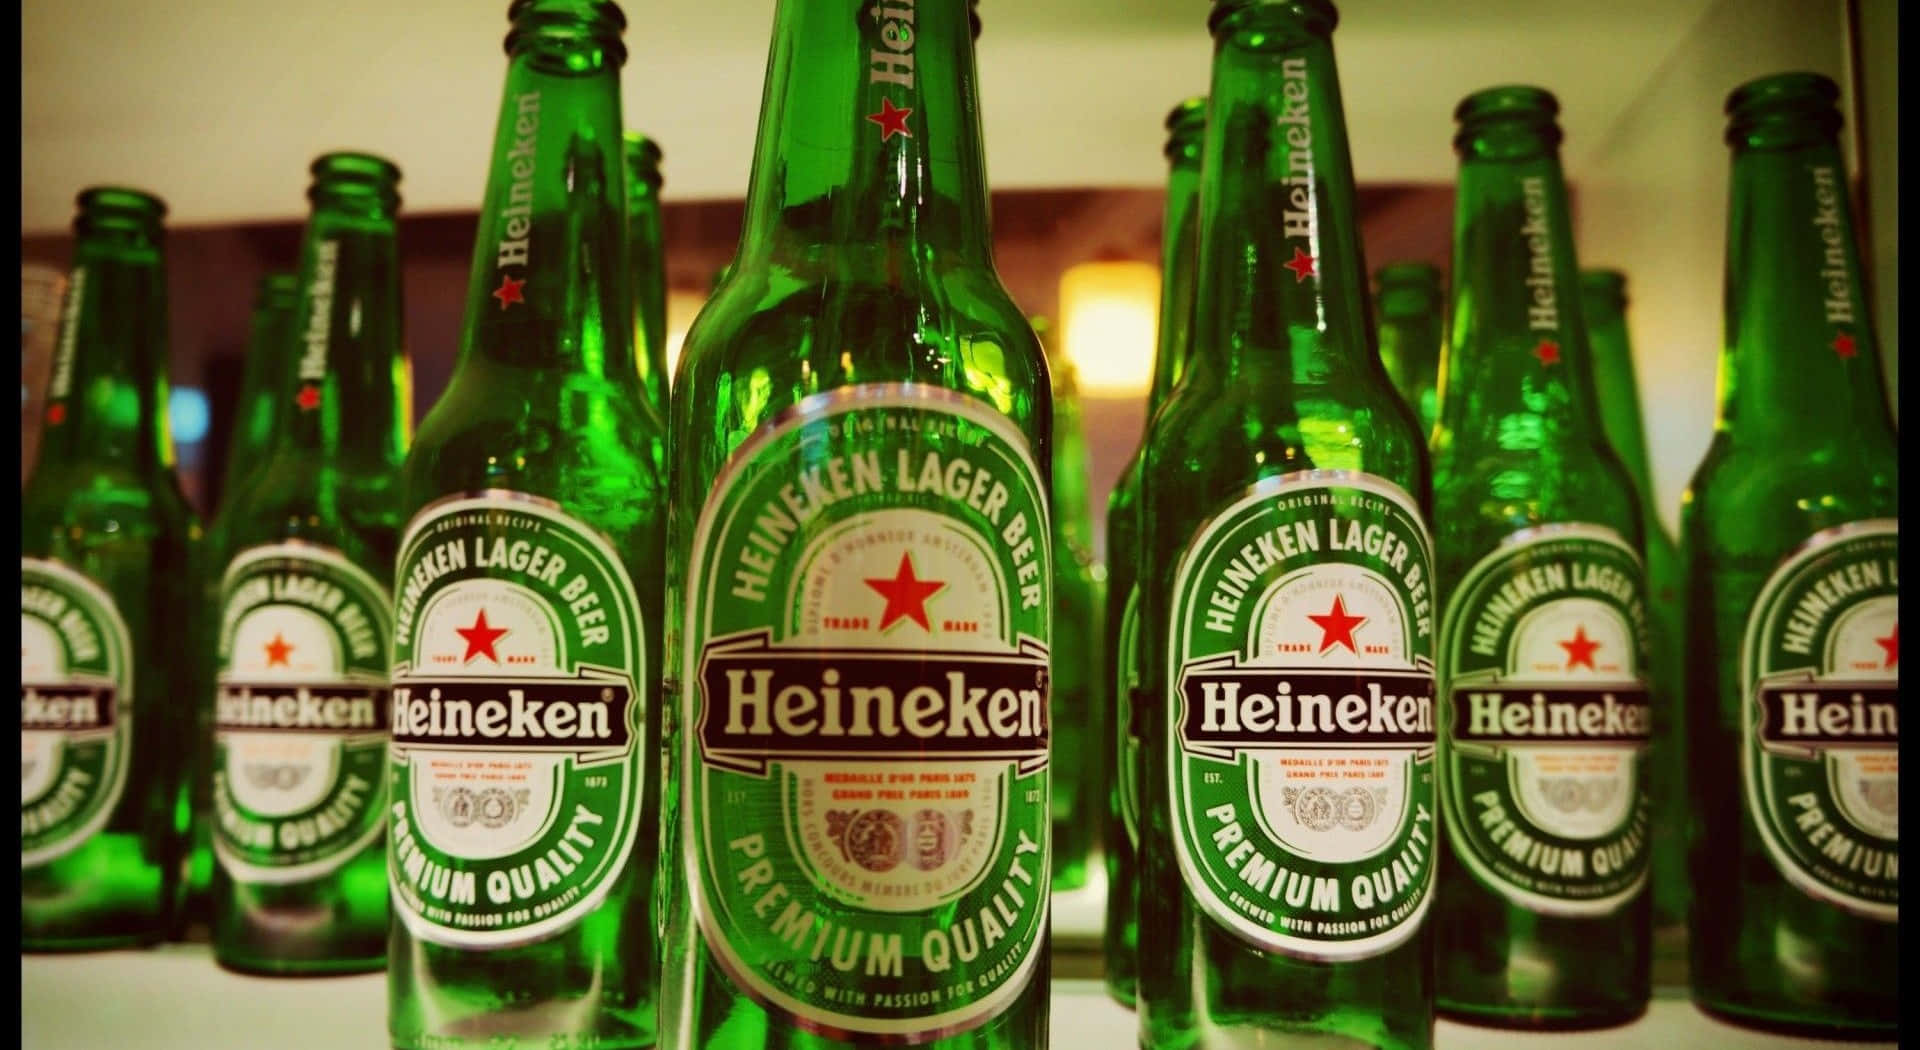 Unabirra Heineken Ghiacciata In Bottiglia Su Una Superficie Di Legno Scuro.